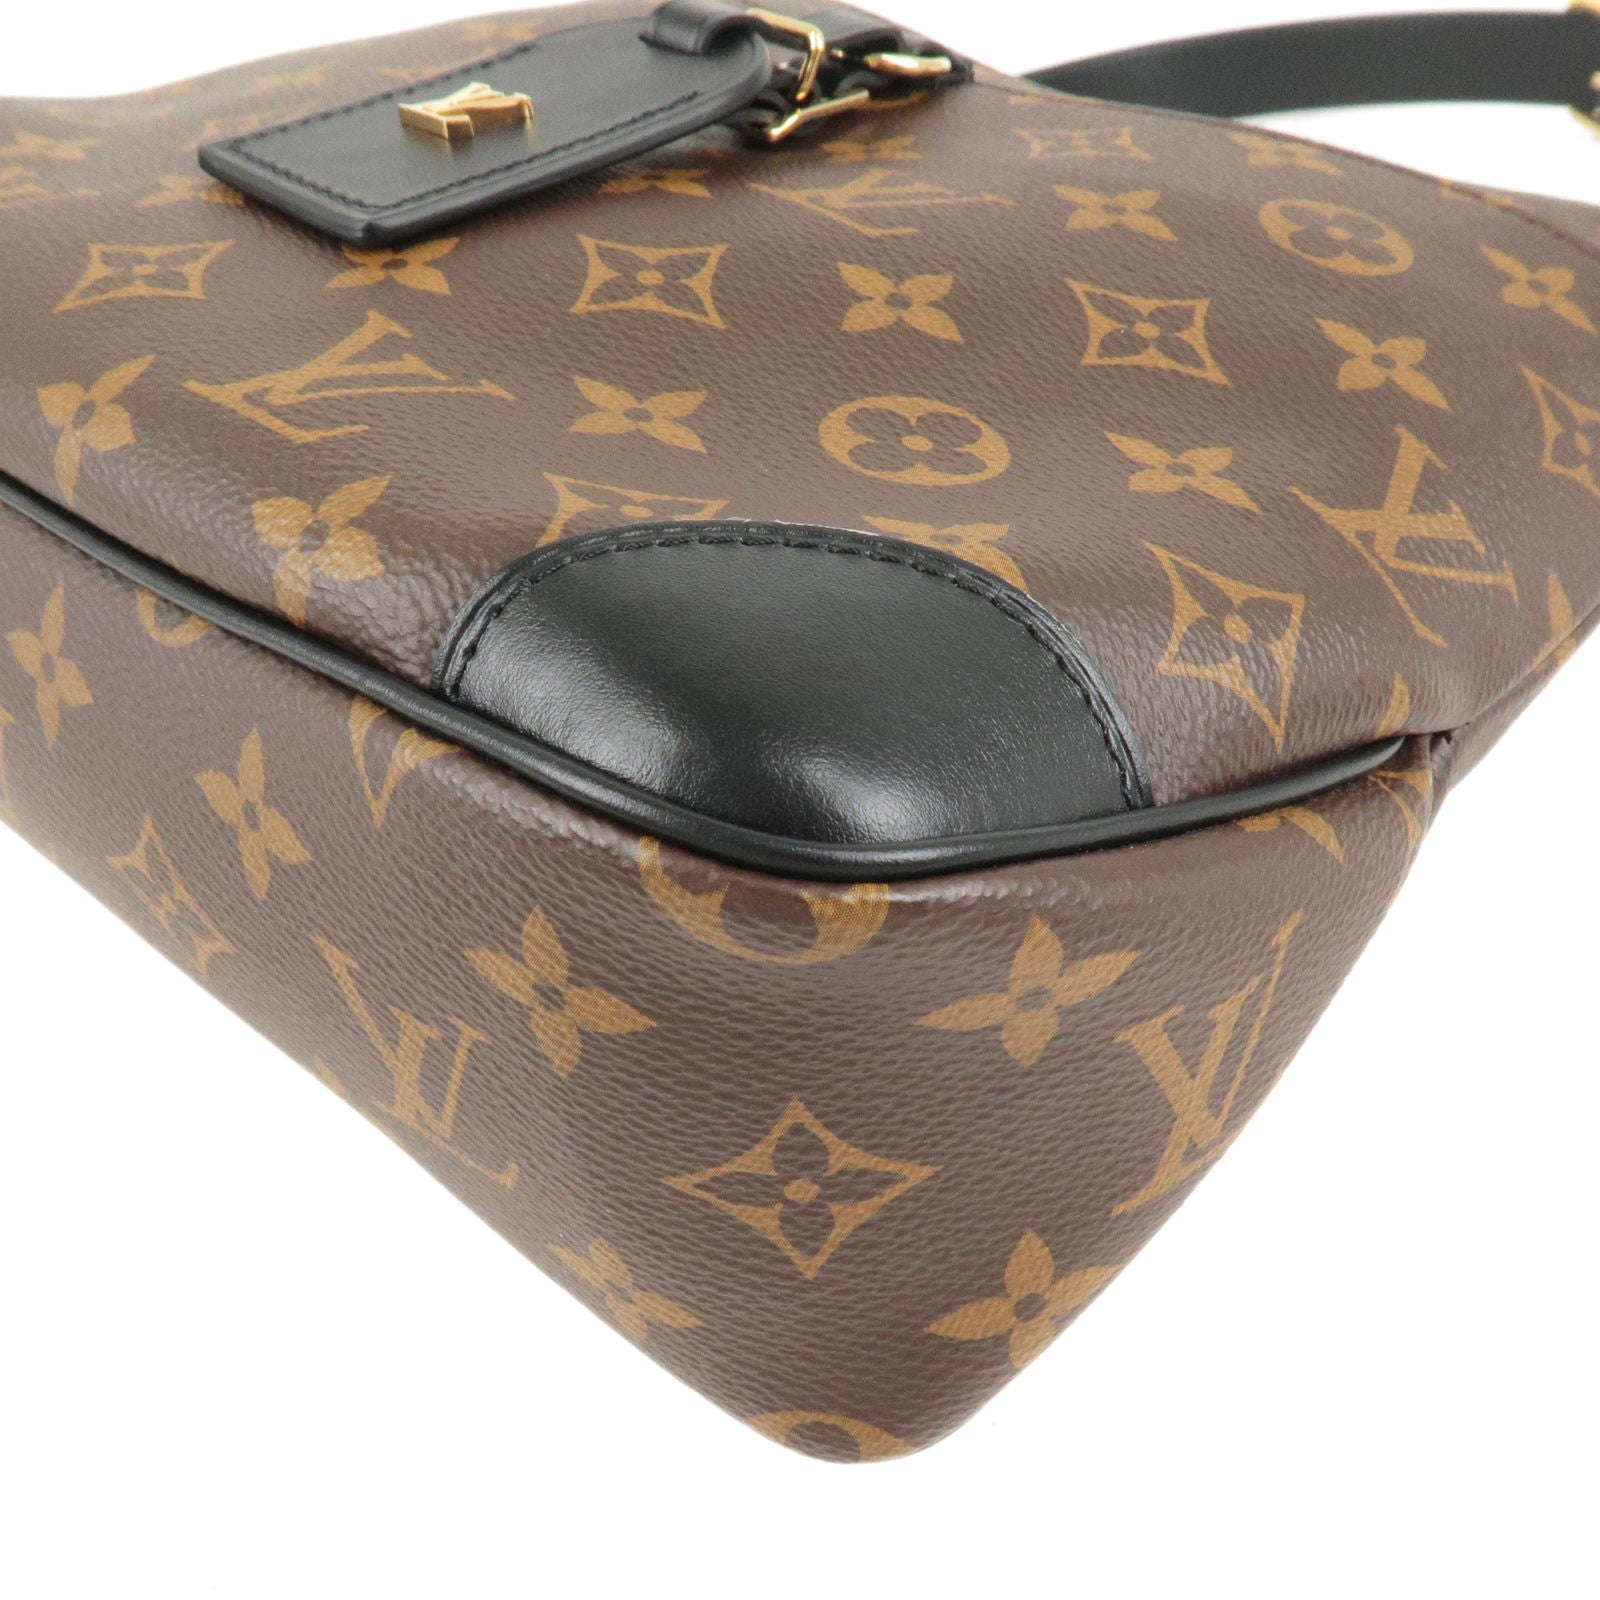 Odéon PM Bag Monogram Canvas - Handbags M45353